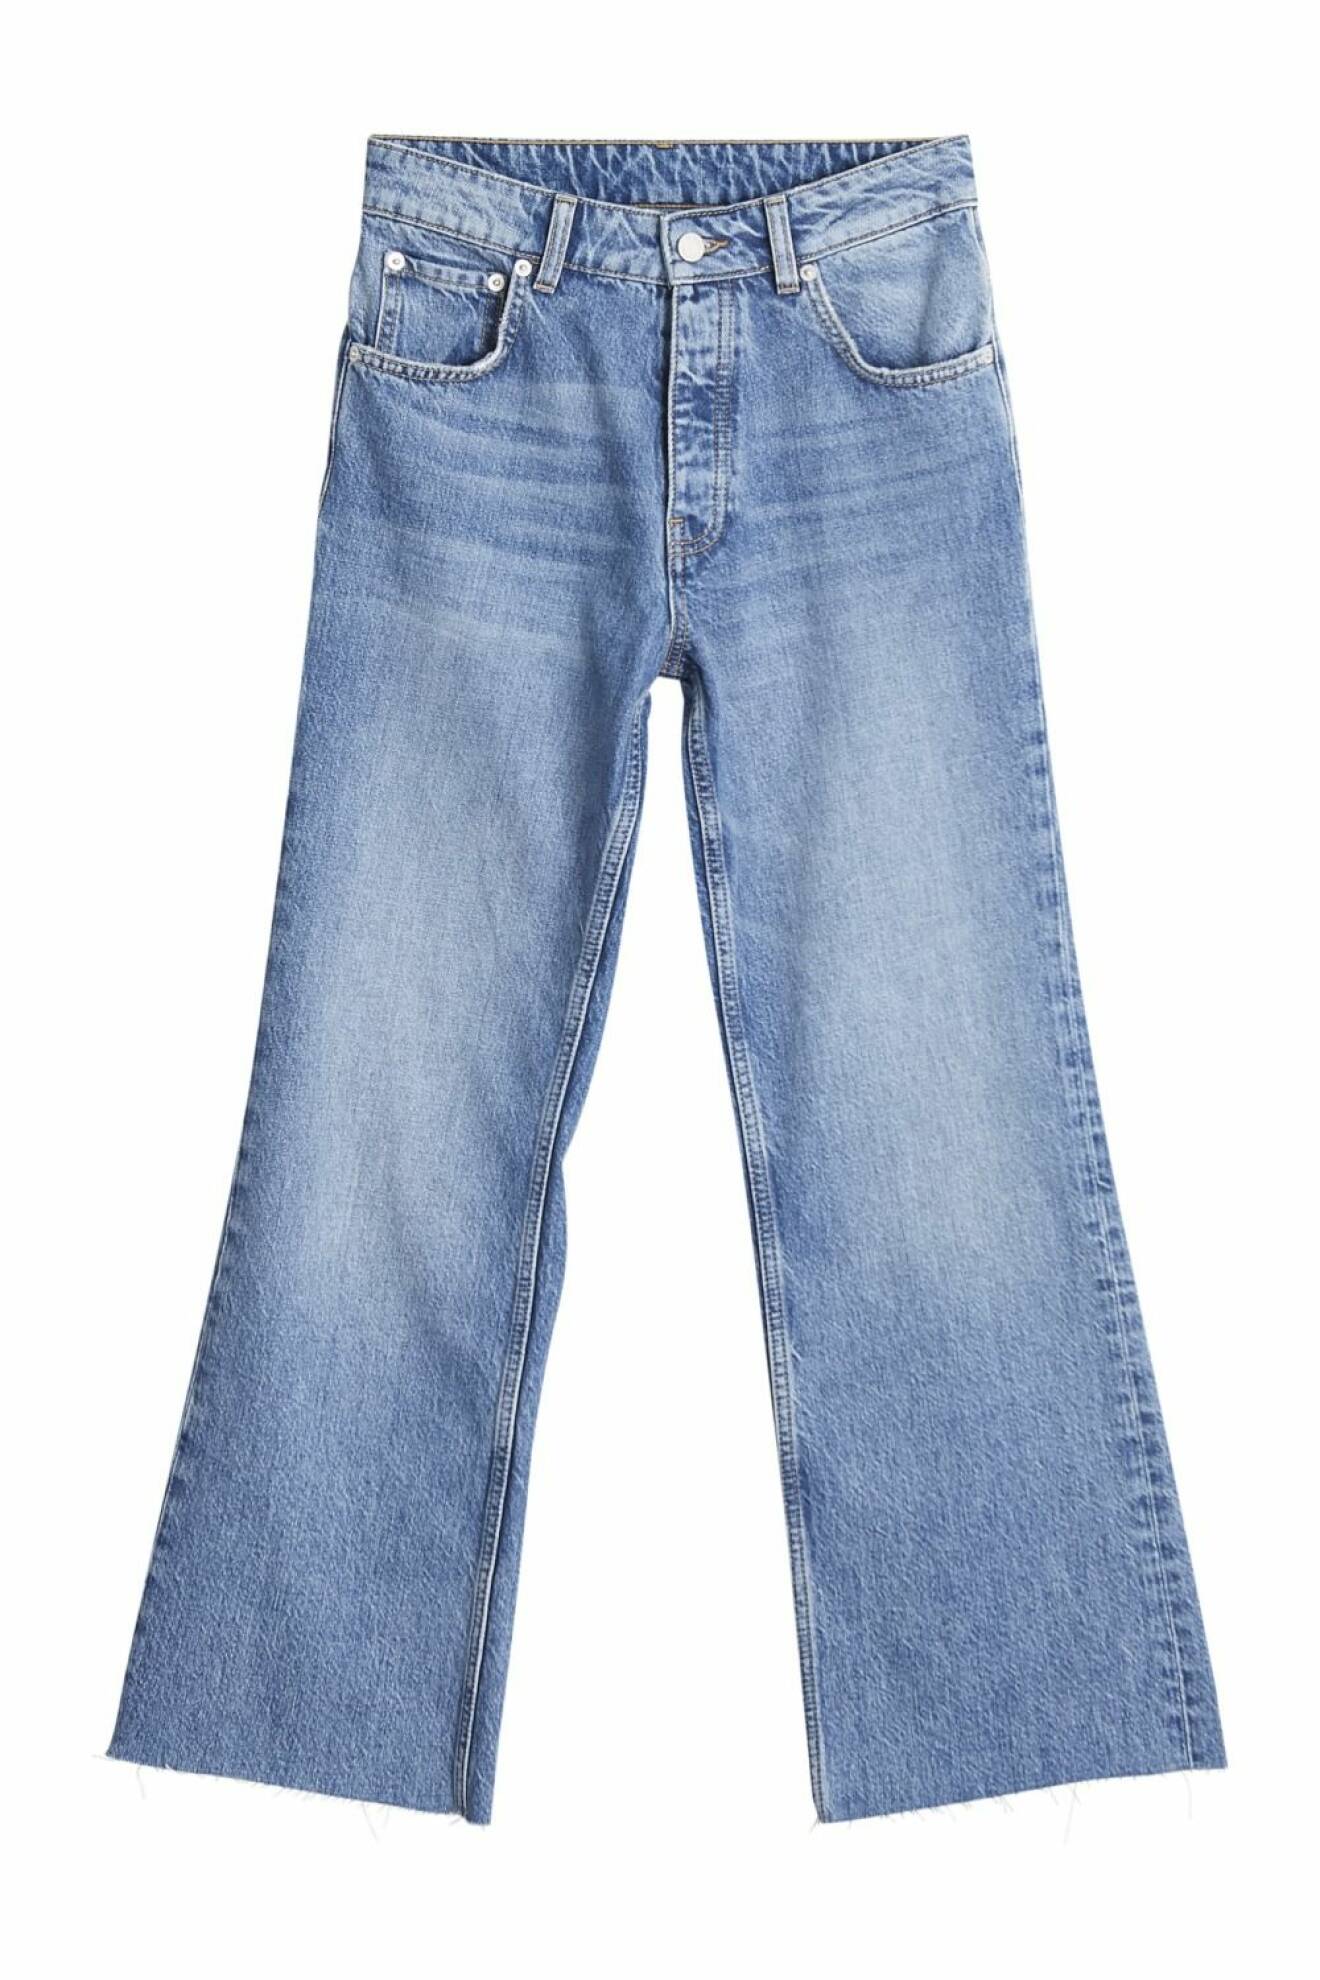 Blåa jeans från Anine Bing x Gina Tricot